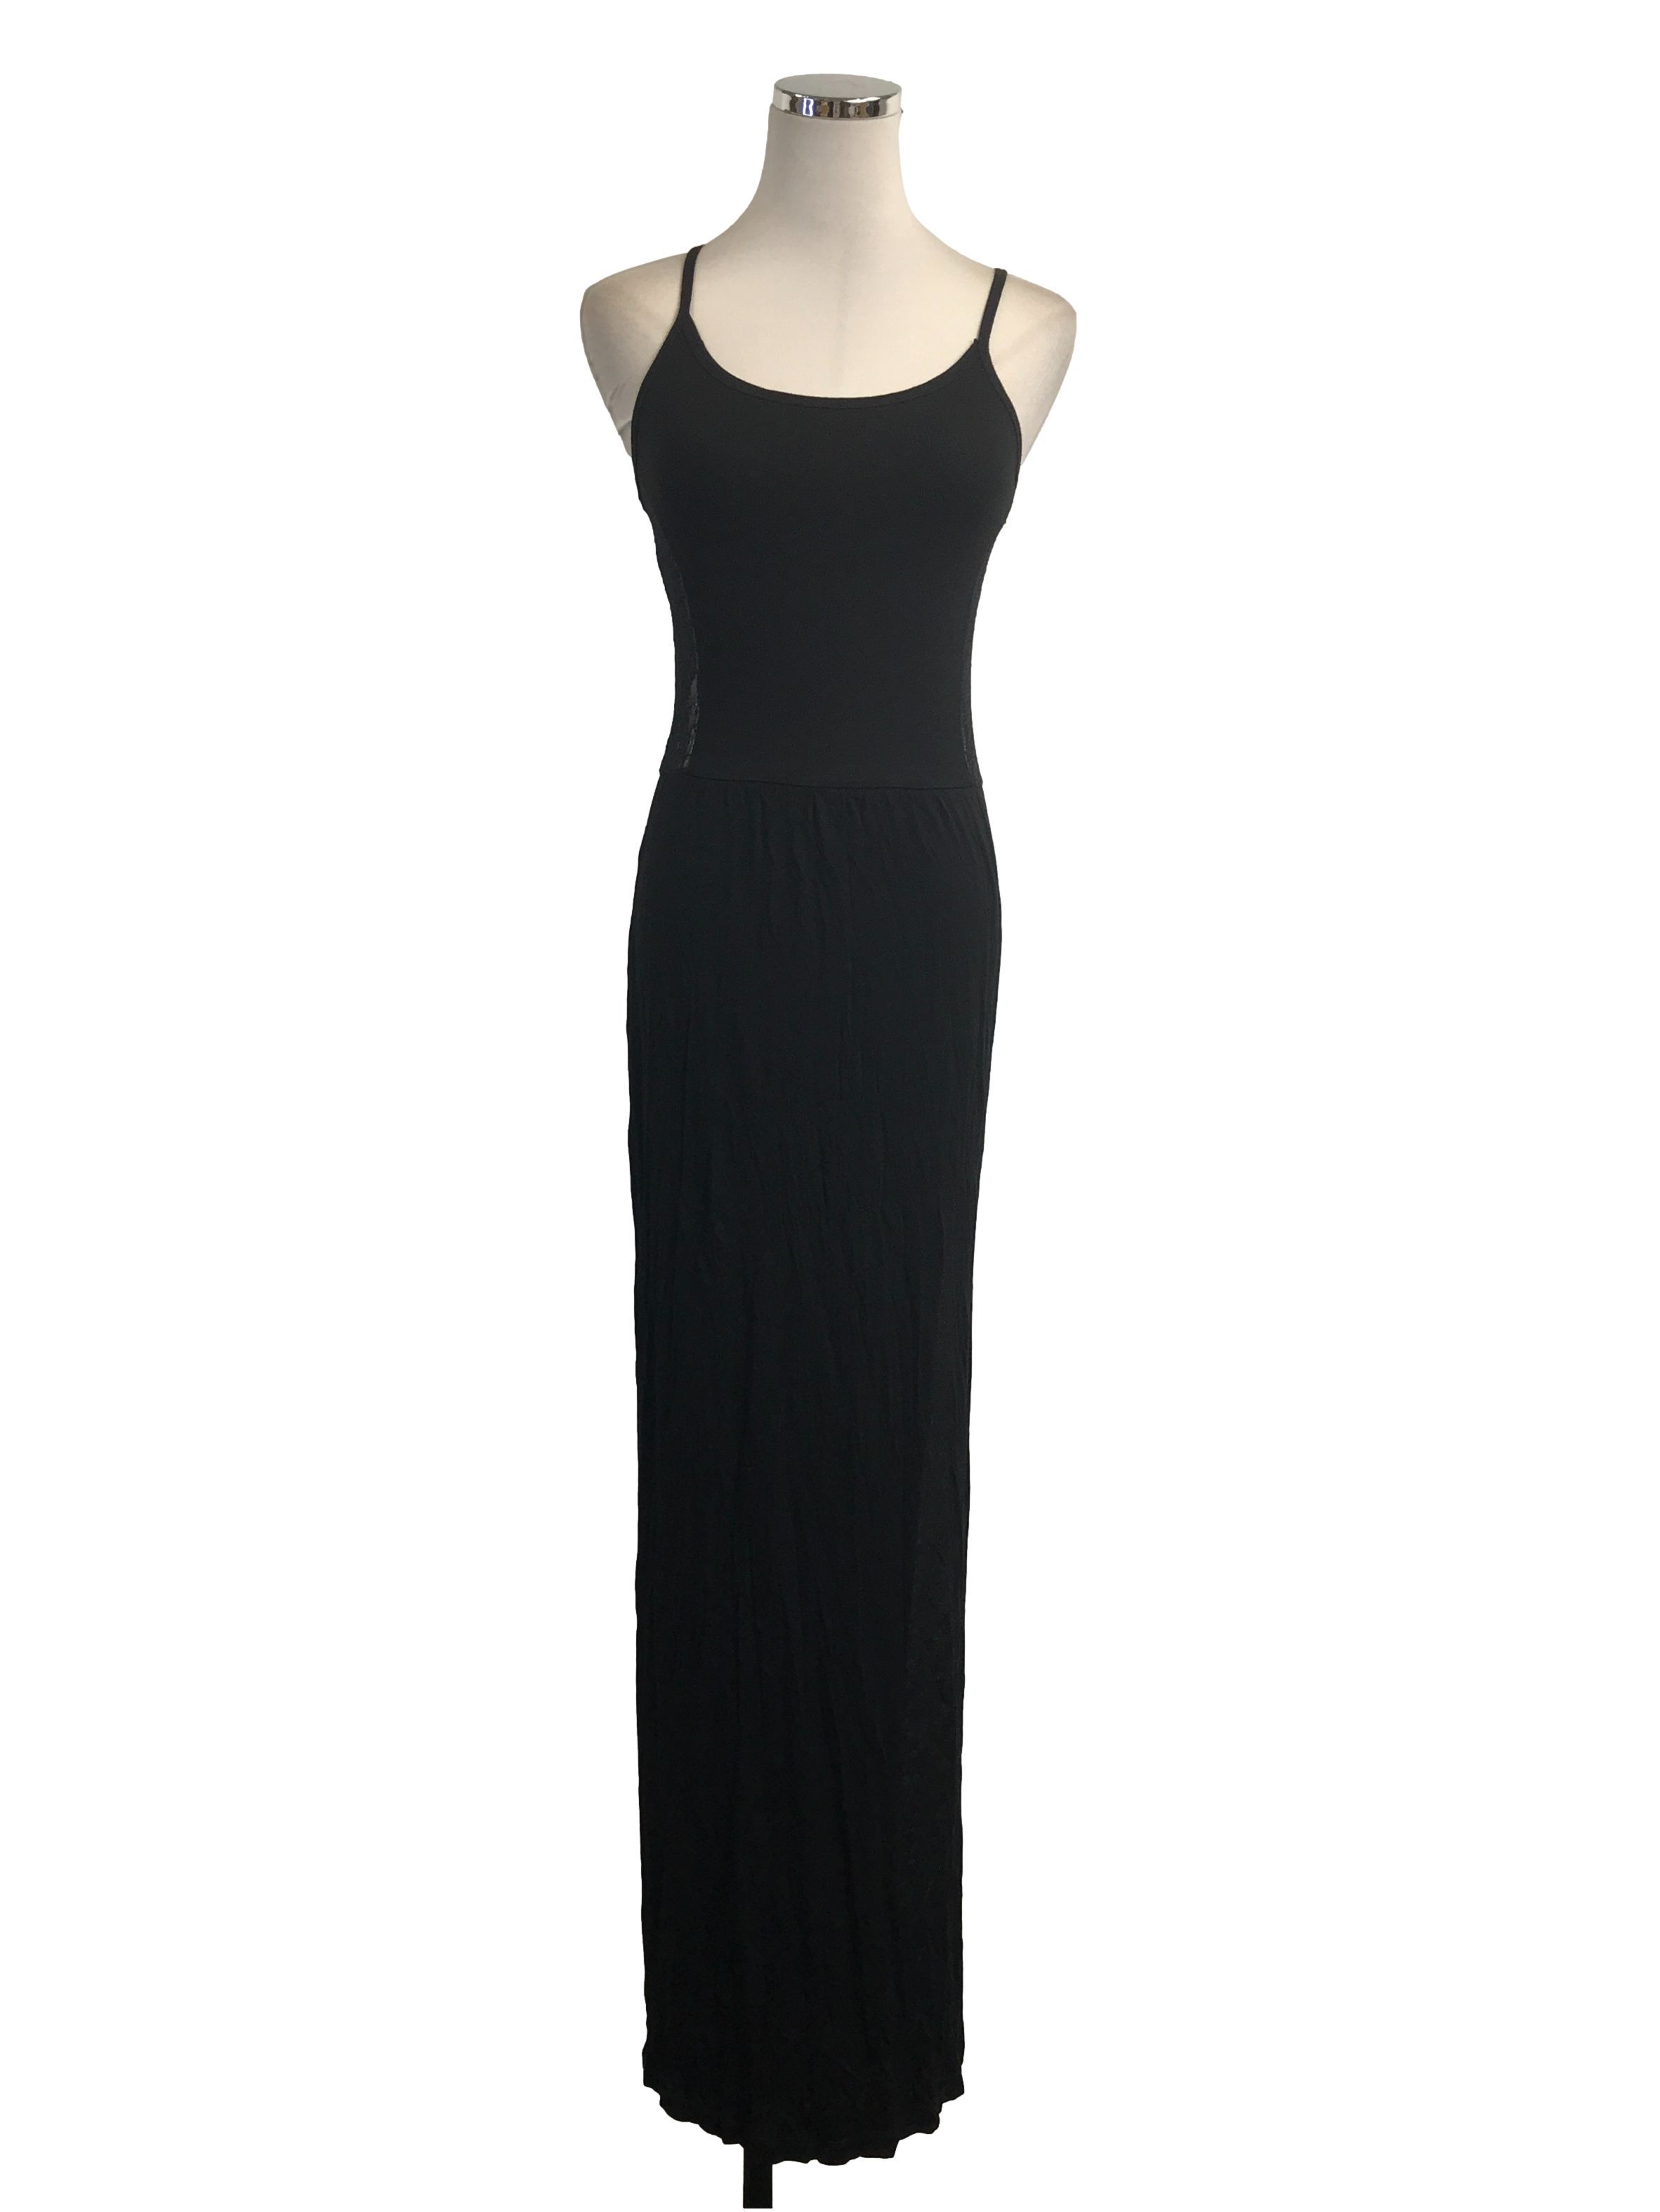 Miss Selfridge lace strappy ruffle maxi dress in black